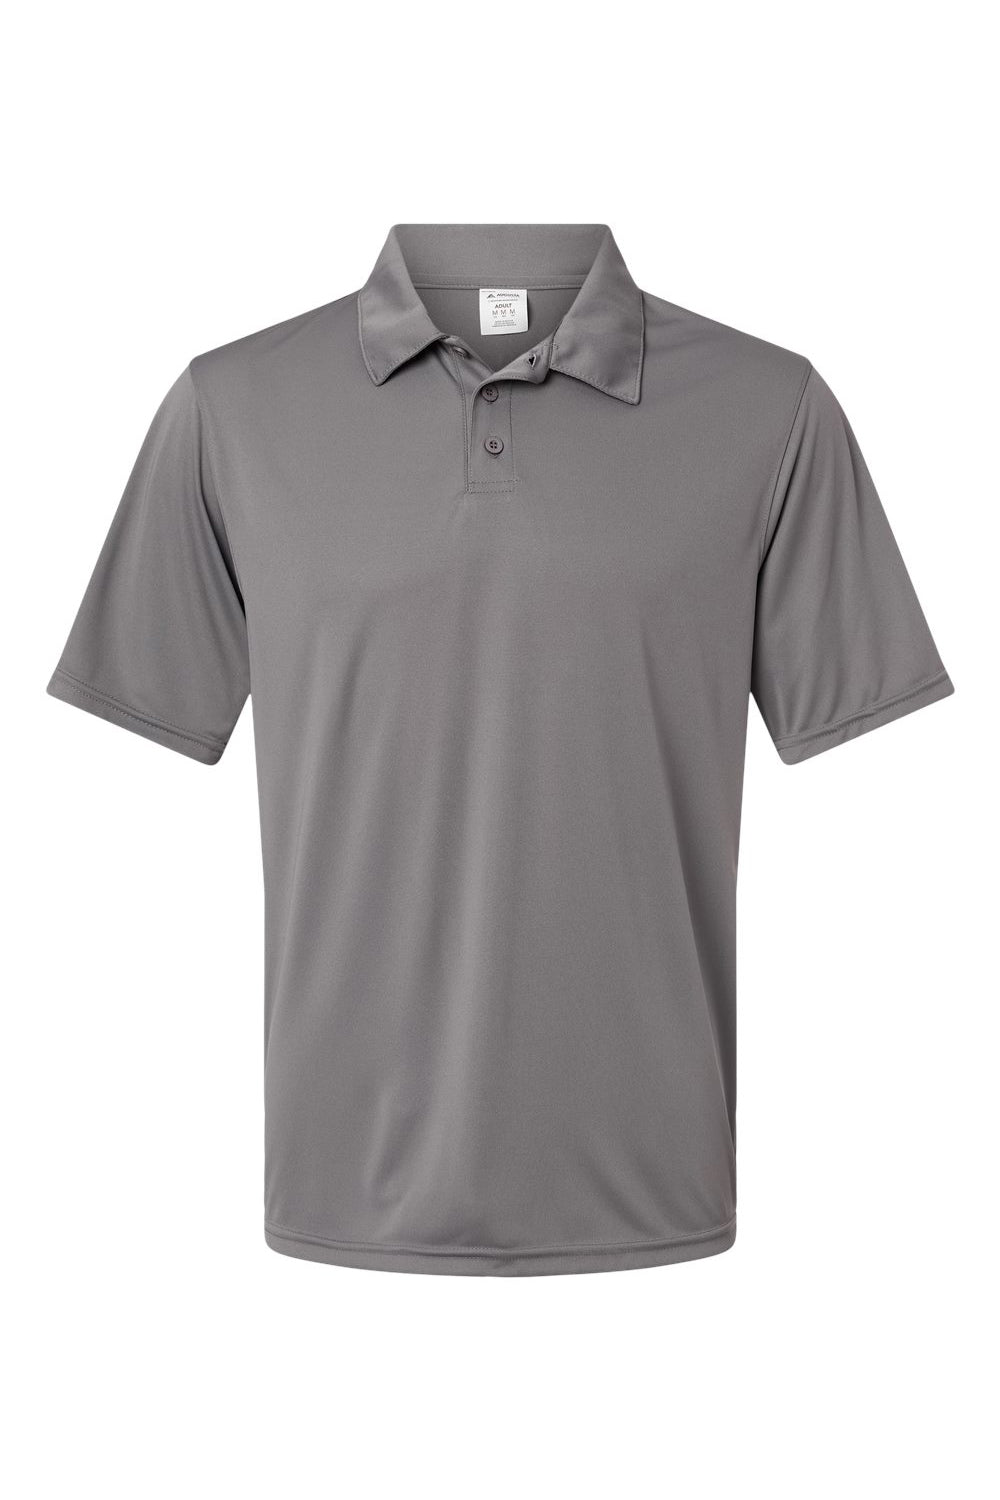 Augusta Sportswear 5017 Mens Vital Moisture Wicking Short Sleeve Polo Shirt Graphite Grey Flat Front